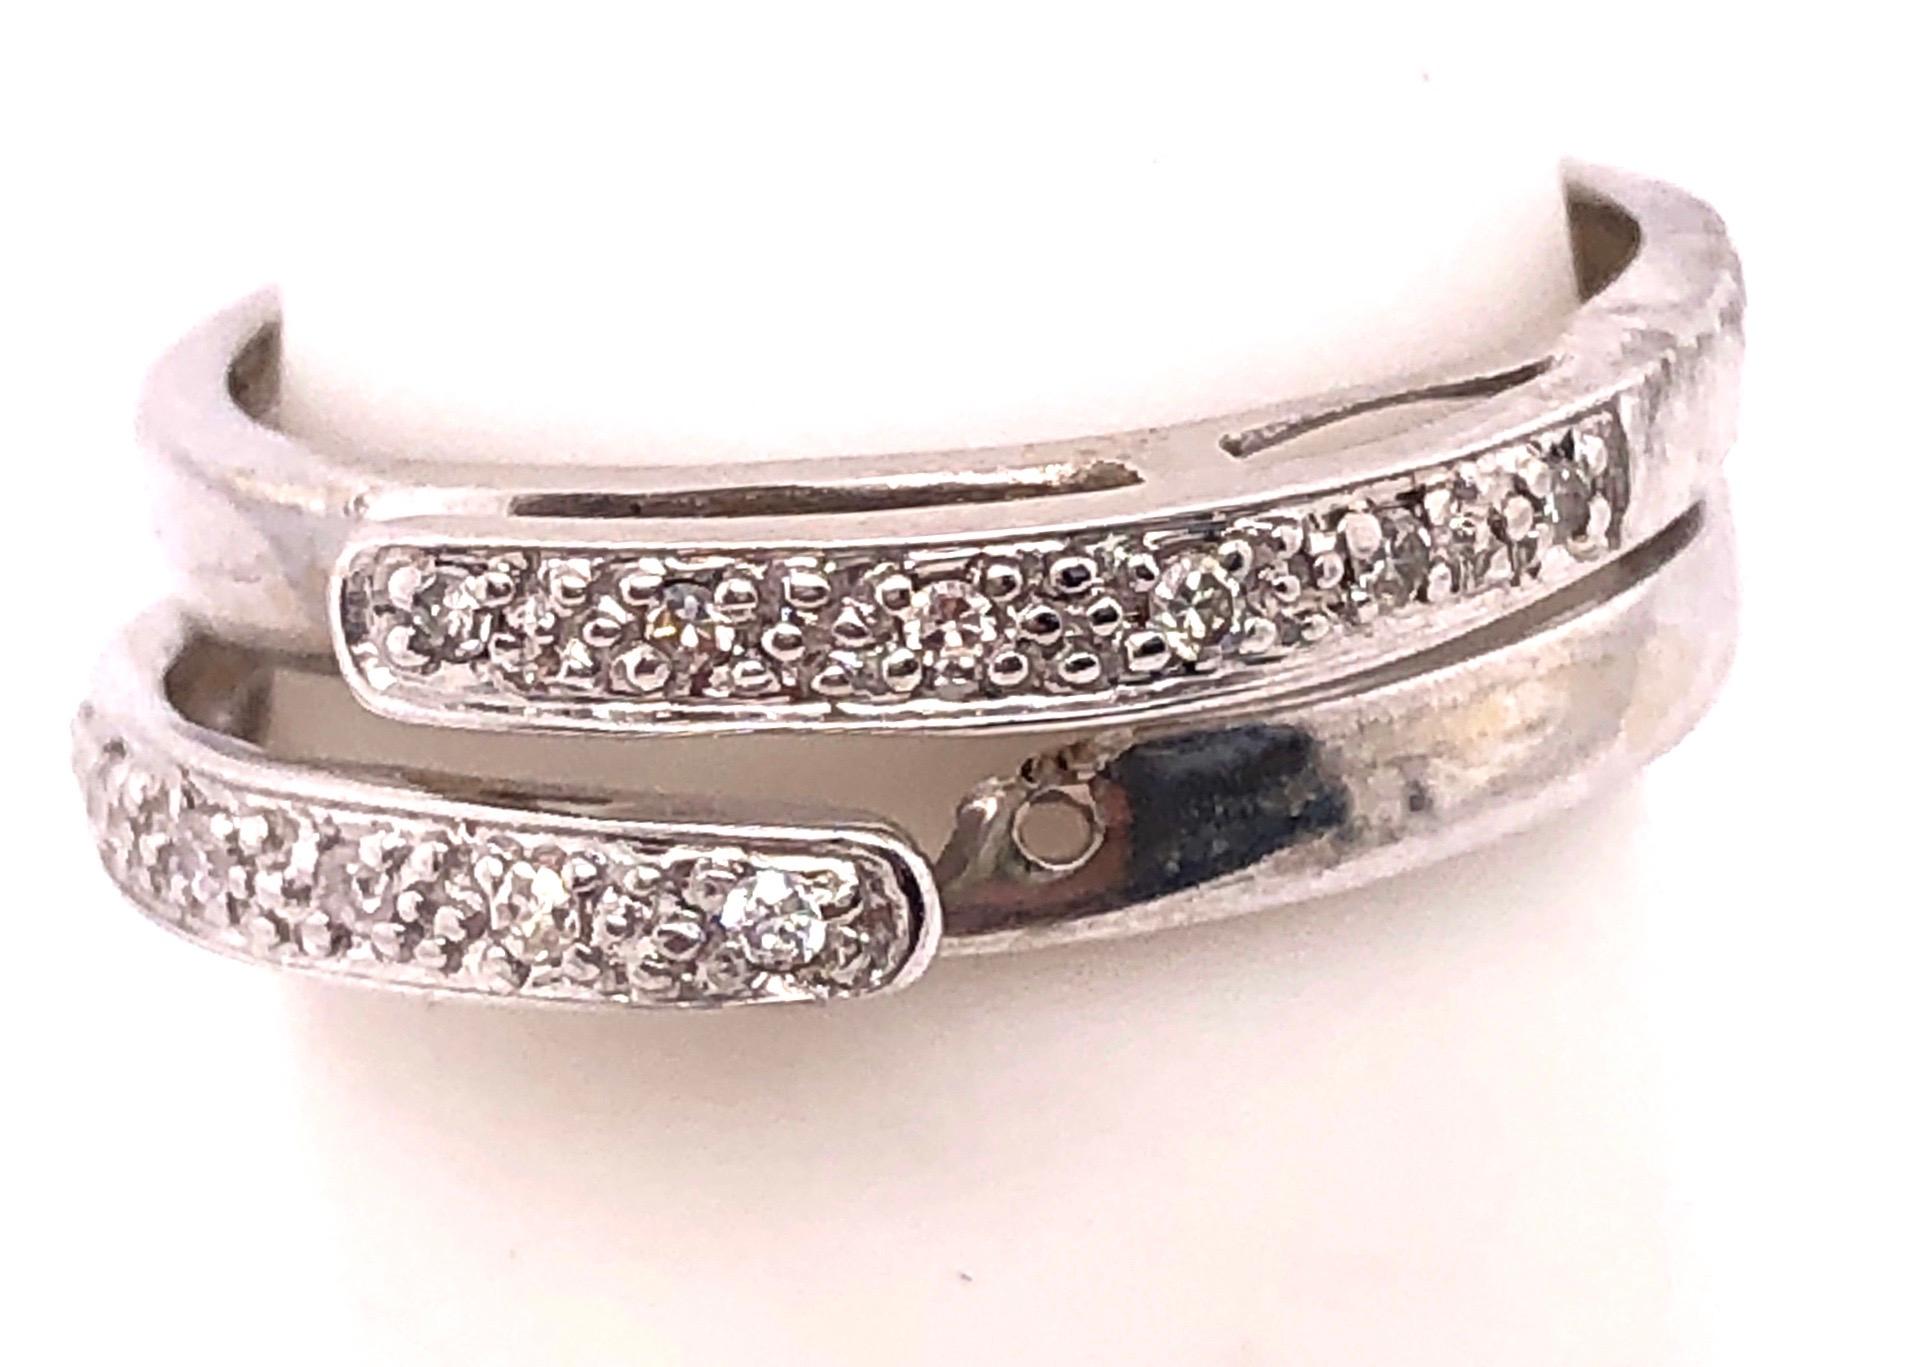 14 Karat White Gold Fashion Ring with Diamonds 0.25 Total Diamond Weight.
Size 5.5 
2.75 grams total weight.